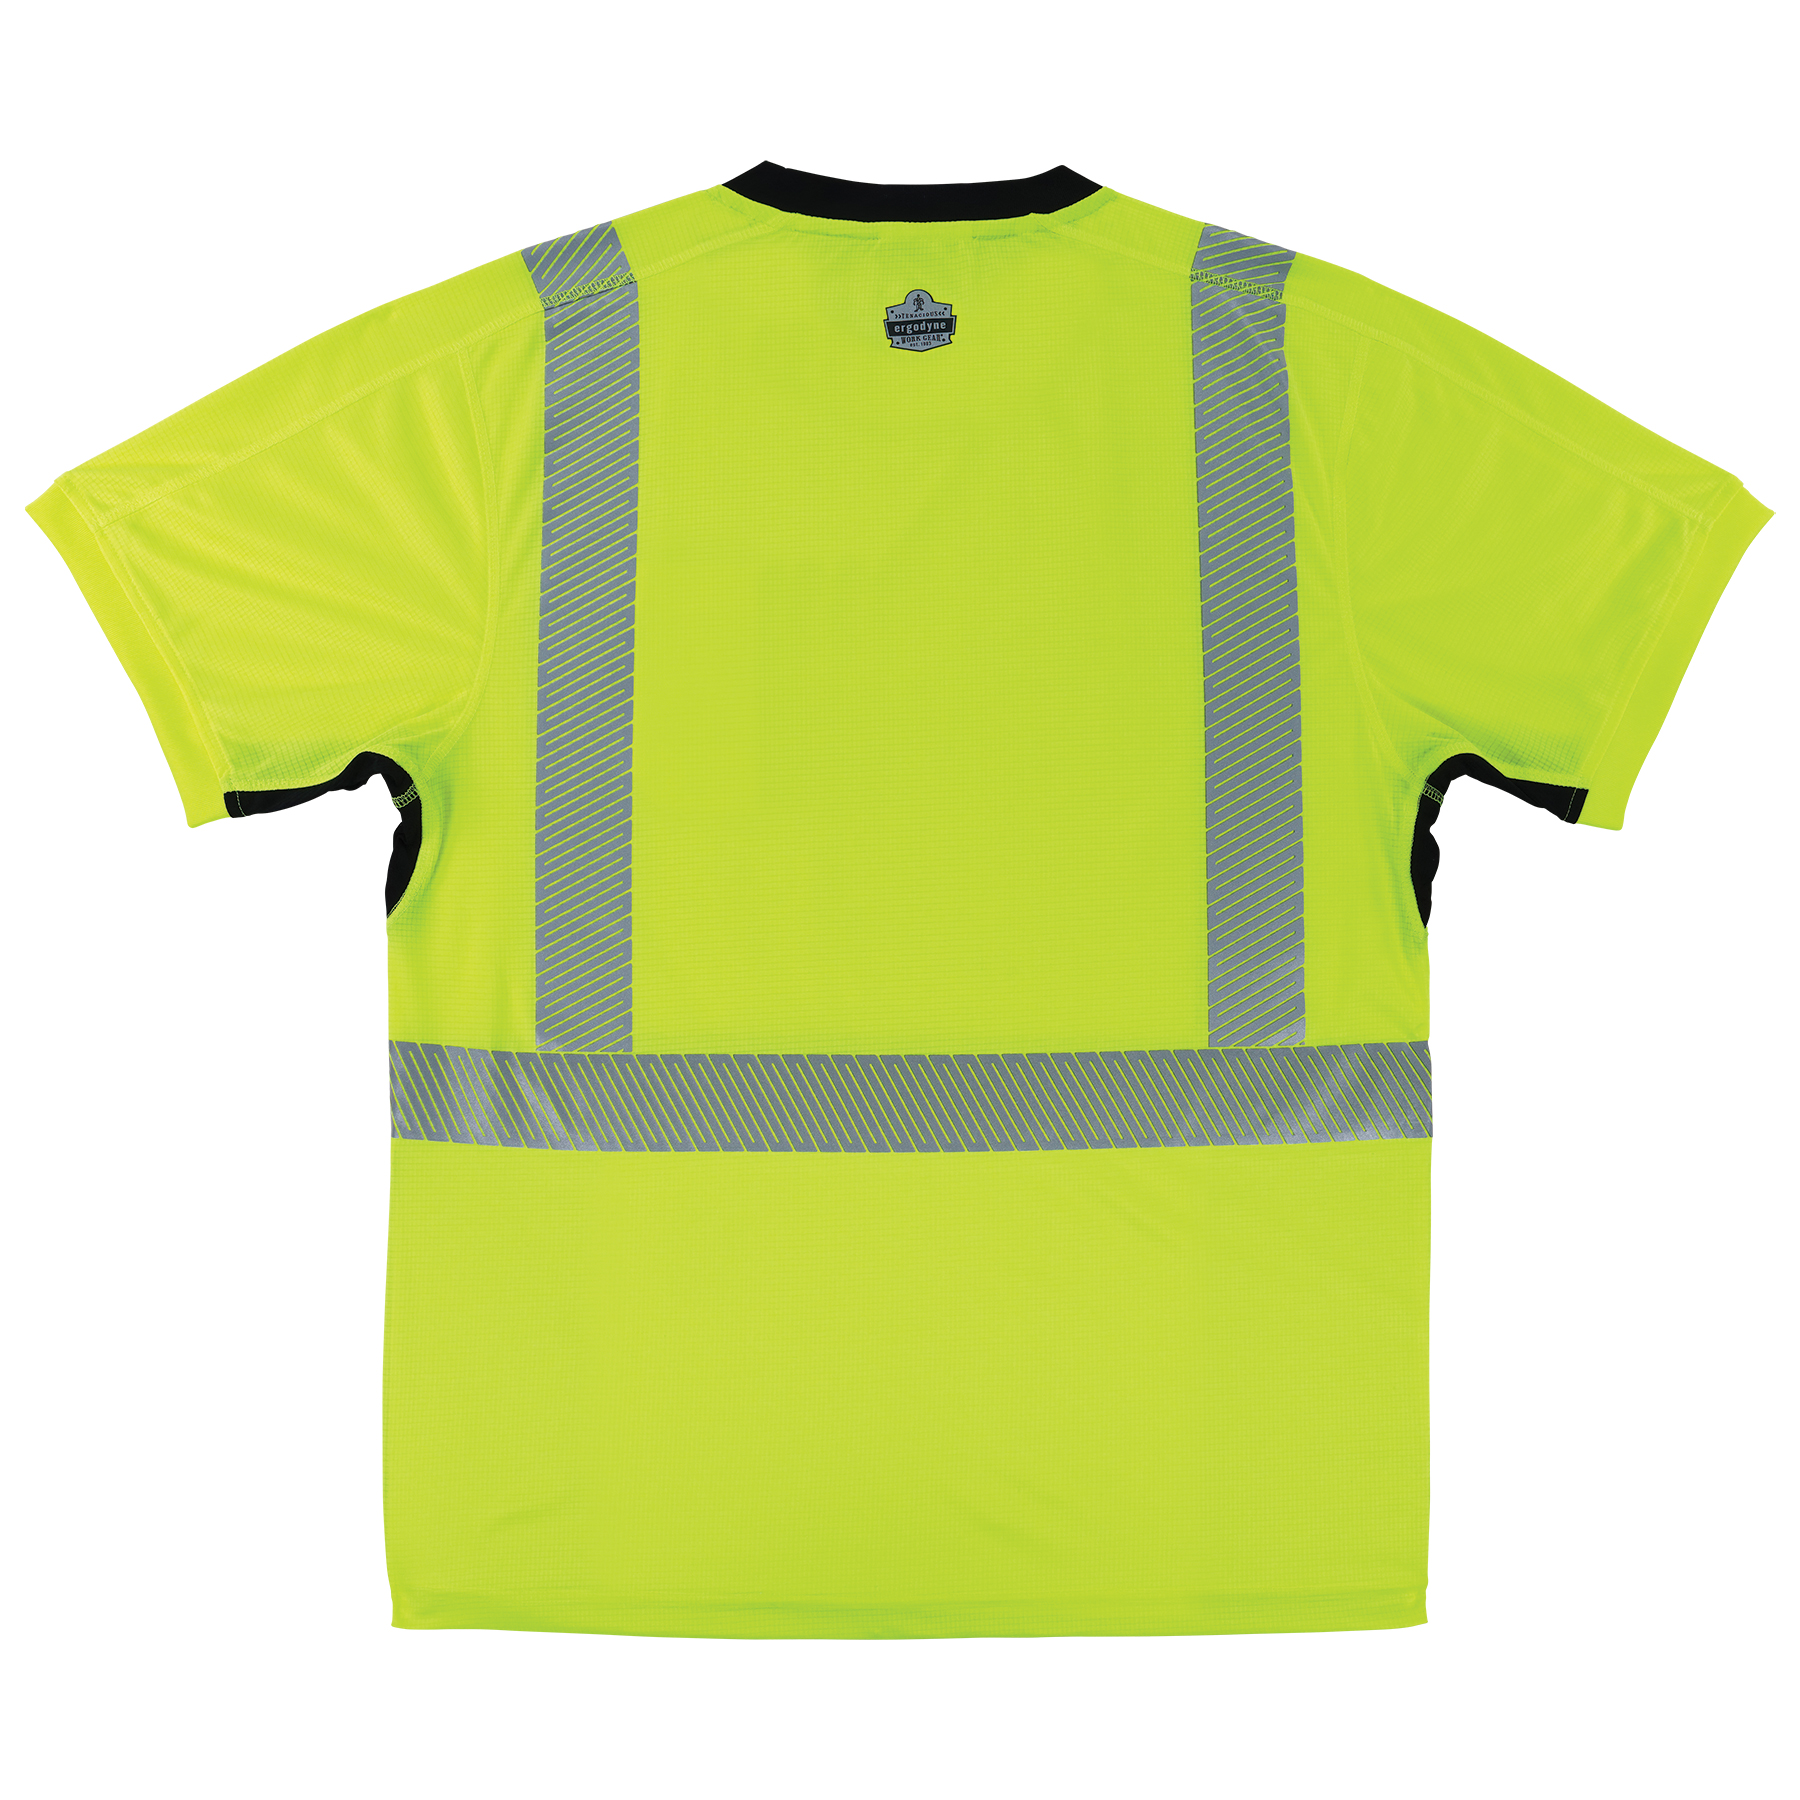 5X with Reflective Stripes Yellow Lime Hi Viz Class 2 Safety T Shirt Medium 